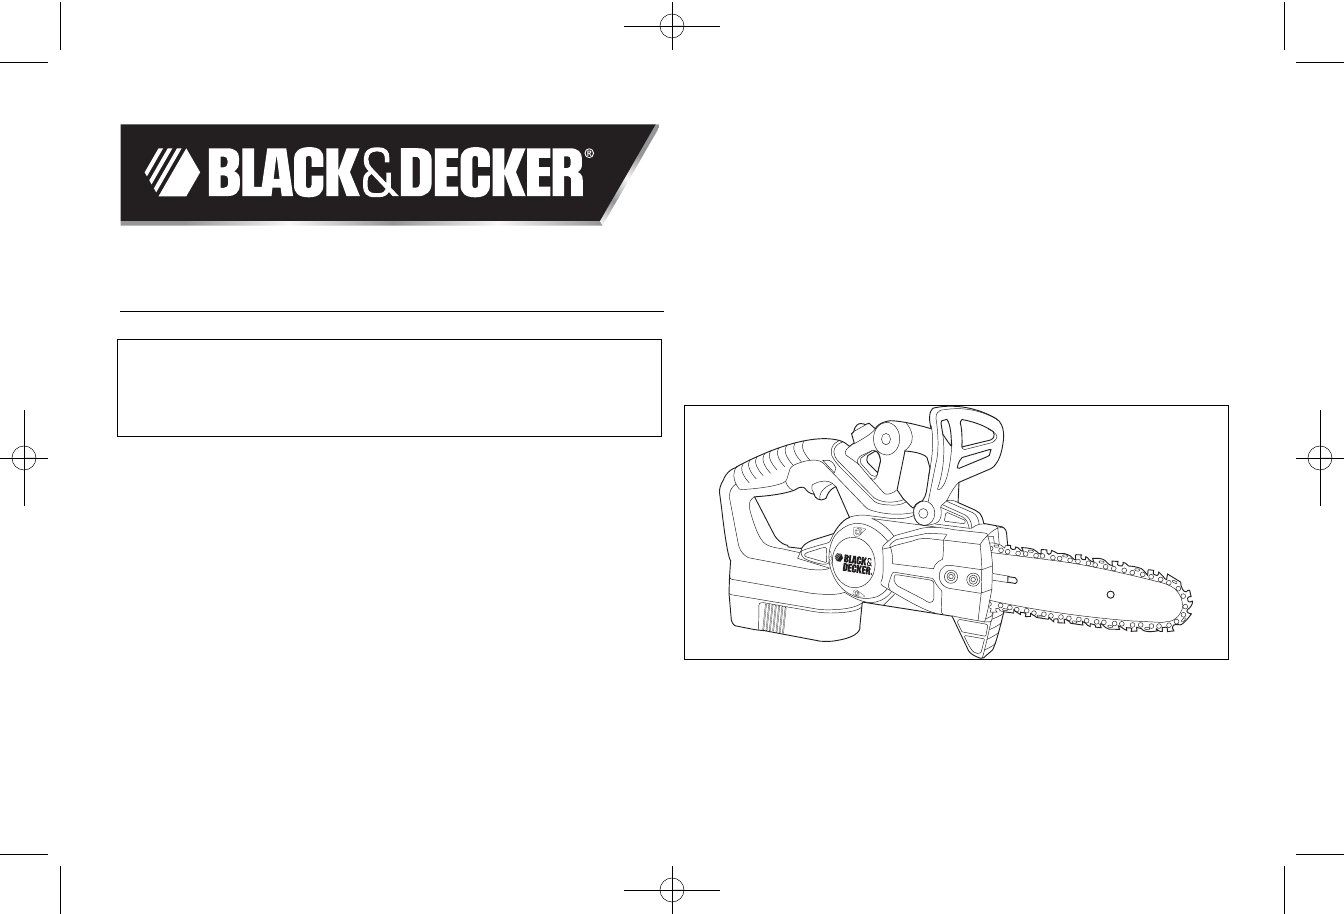 Black & Decker 18-Volt Cordless Chain Saw CCS818 